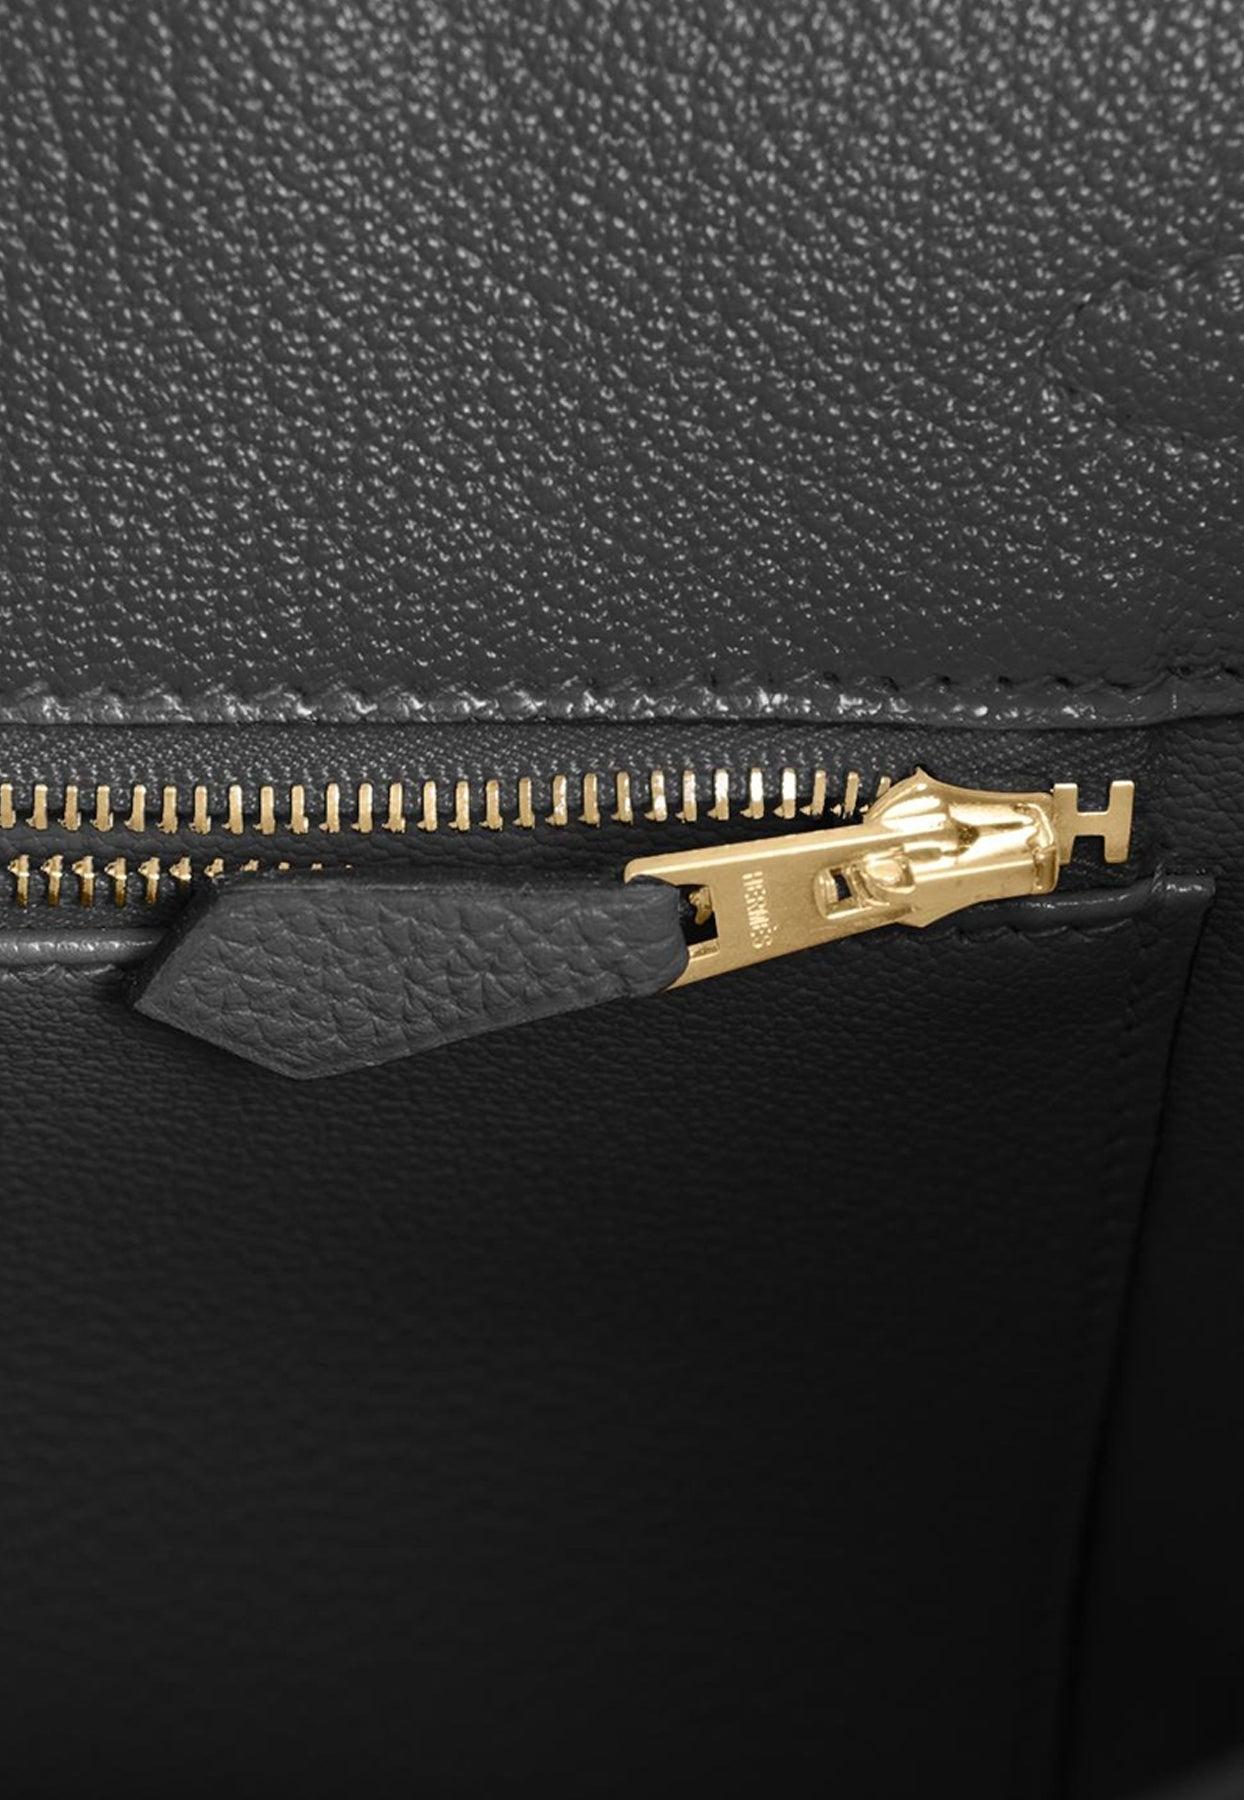 Hermès Birkin 25cm Veau Togo Noir 89 Rose Gold Hardware – SukiLux